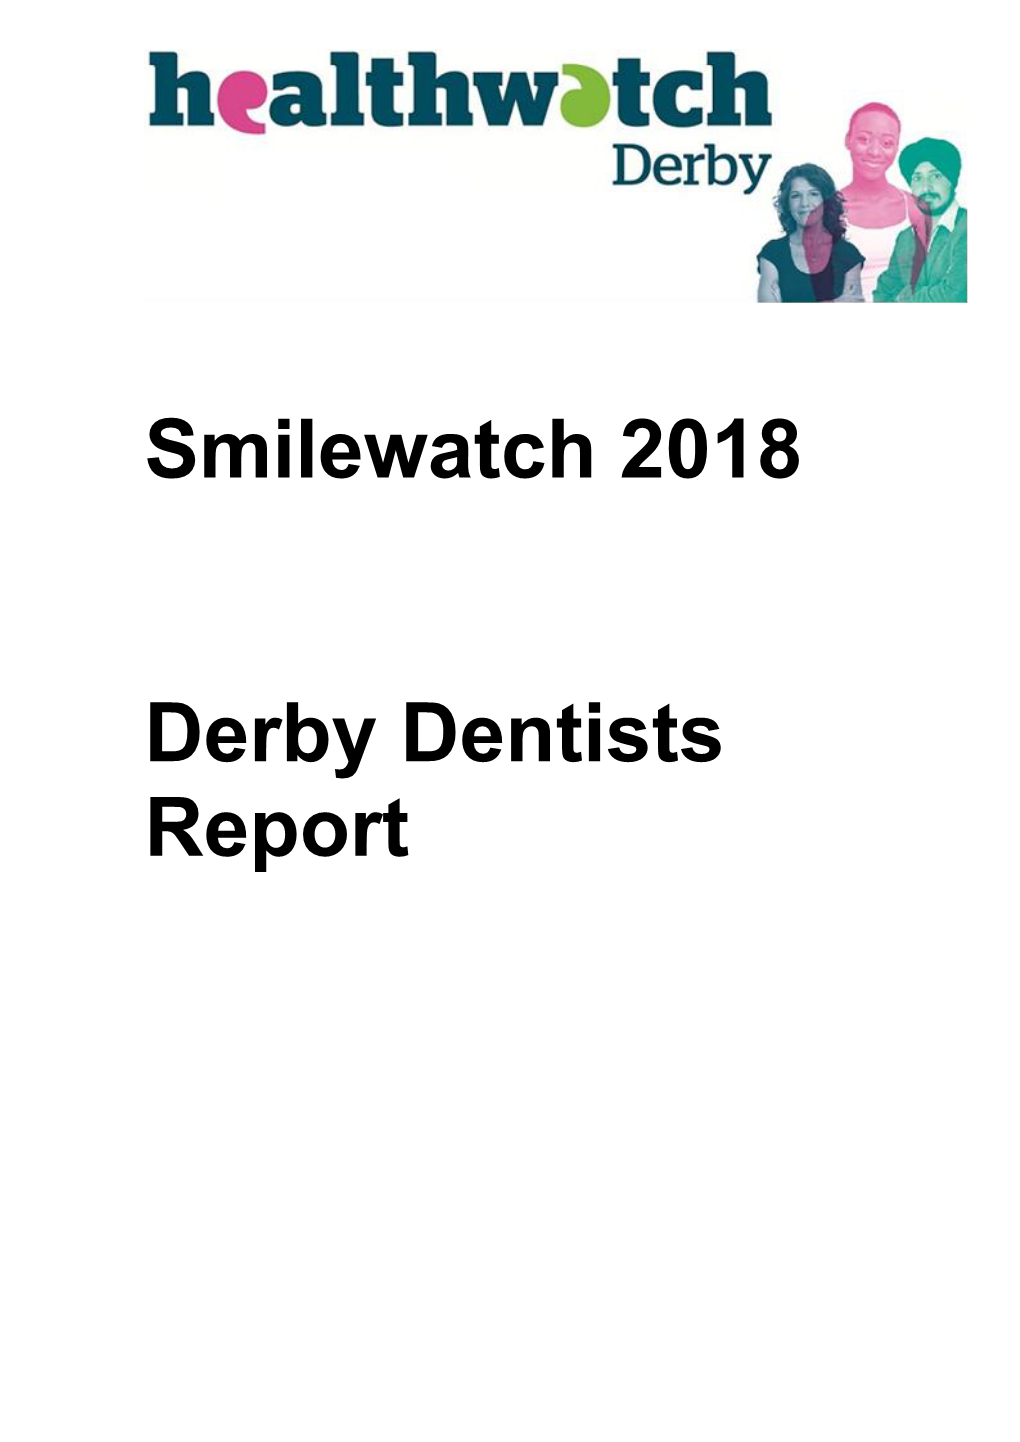 Smilewatch 2018 Derby Dentists Report